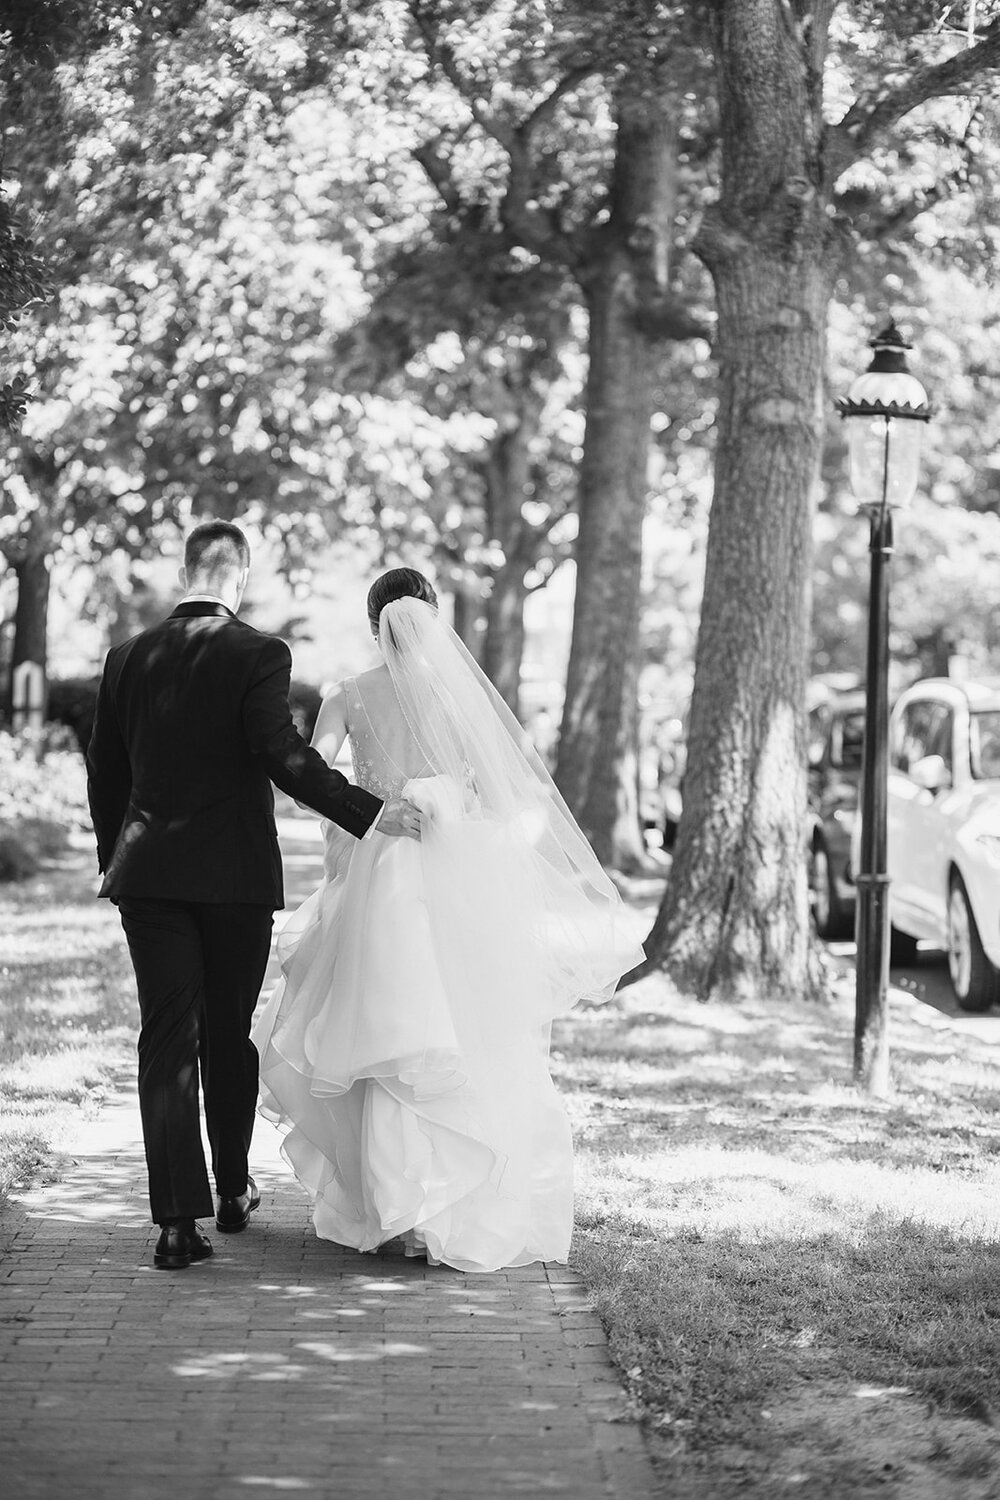  Bride and Groom portraits | Sarah Mattozzi Photography | Ball Gown Wedding dress and Black Tux | Outdoor Classic Wedding at Third Church and Veritas School | Richmond Wedding Photographer 